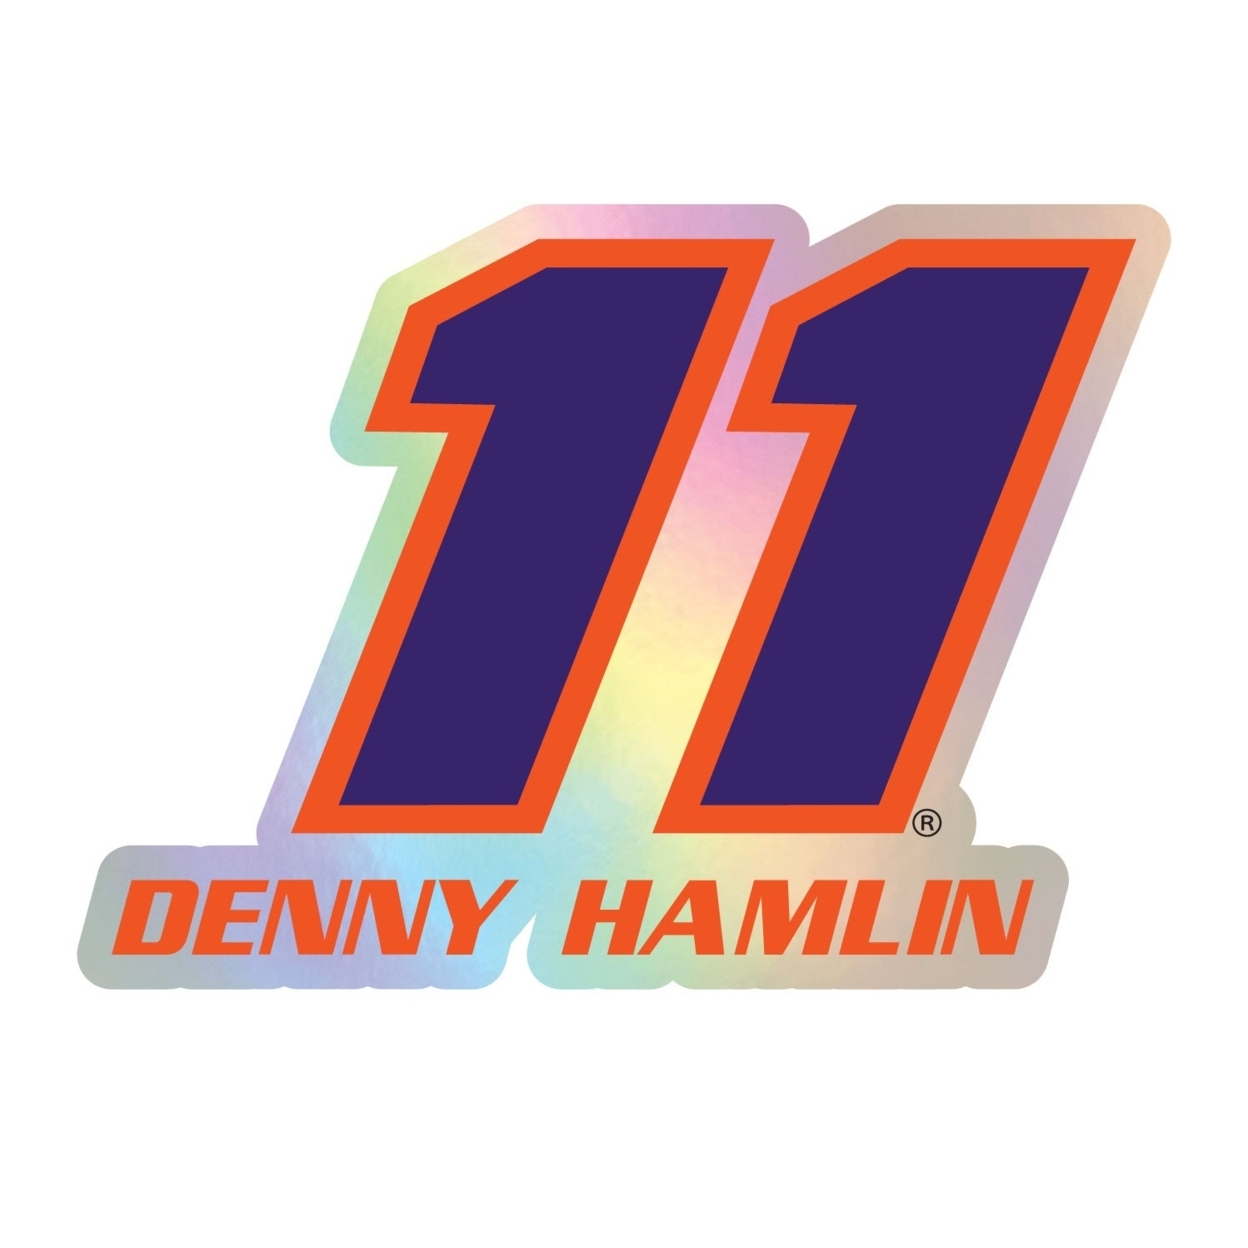 #11 Denny Hamlin Laser Cut Holographic Decal - 10-Inch